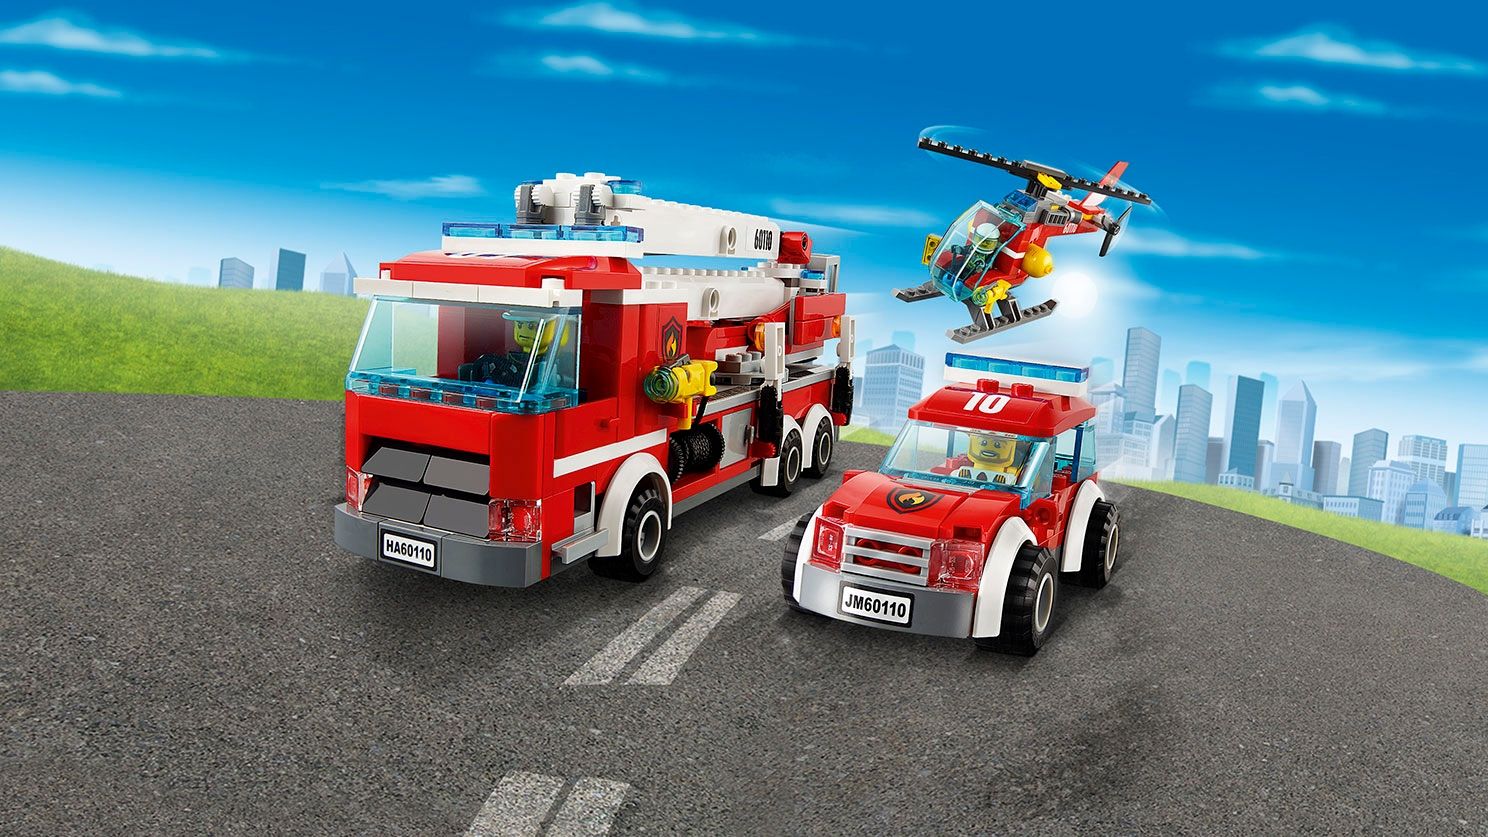 LEGO City 60110 Große Feuerwehrstation LEGO_60110_web_SEC03_1488.jpg